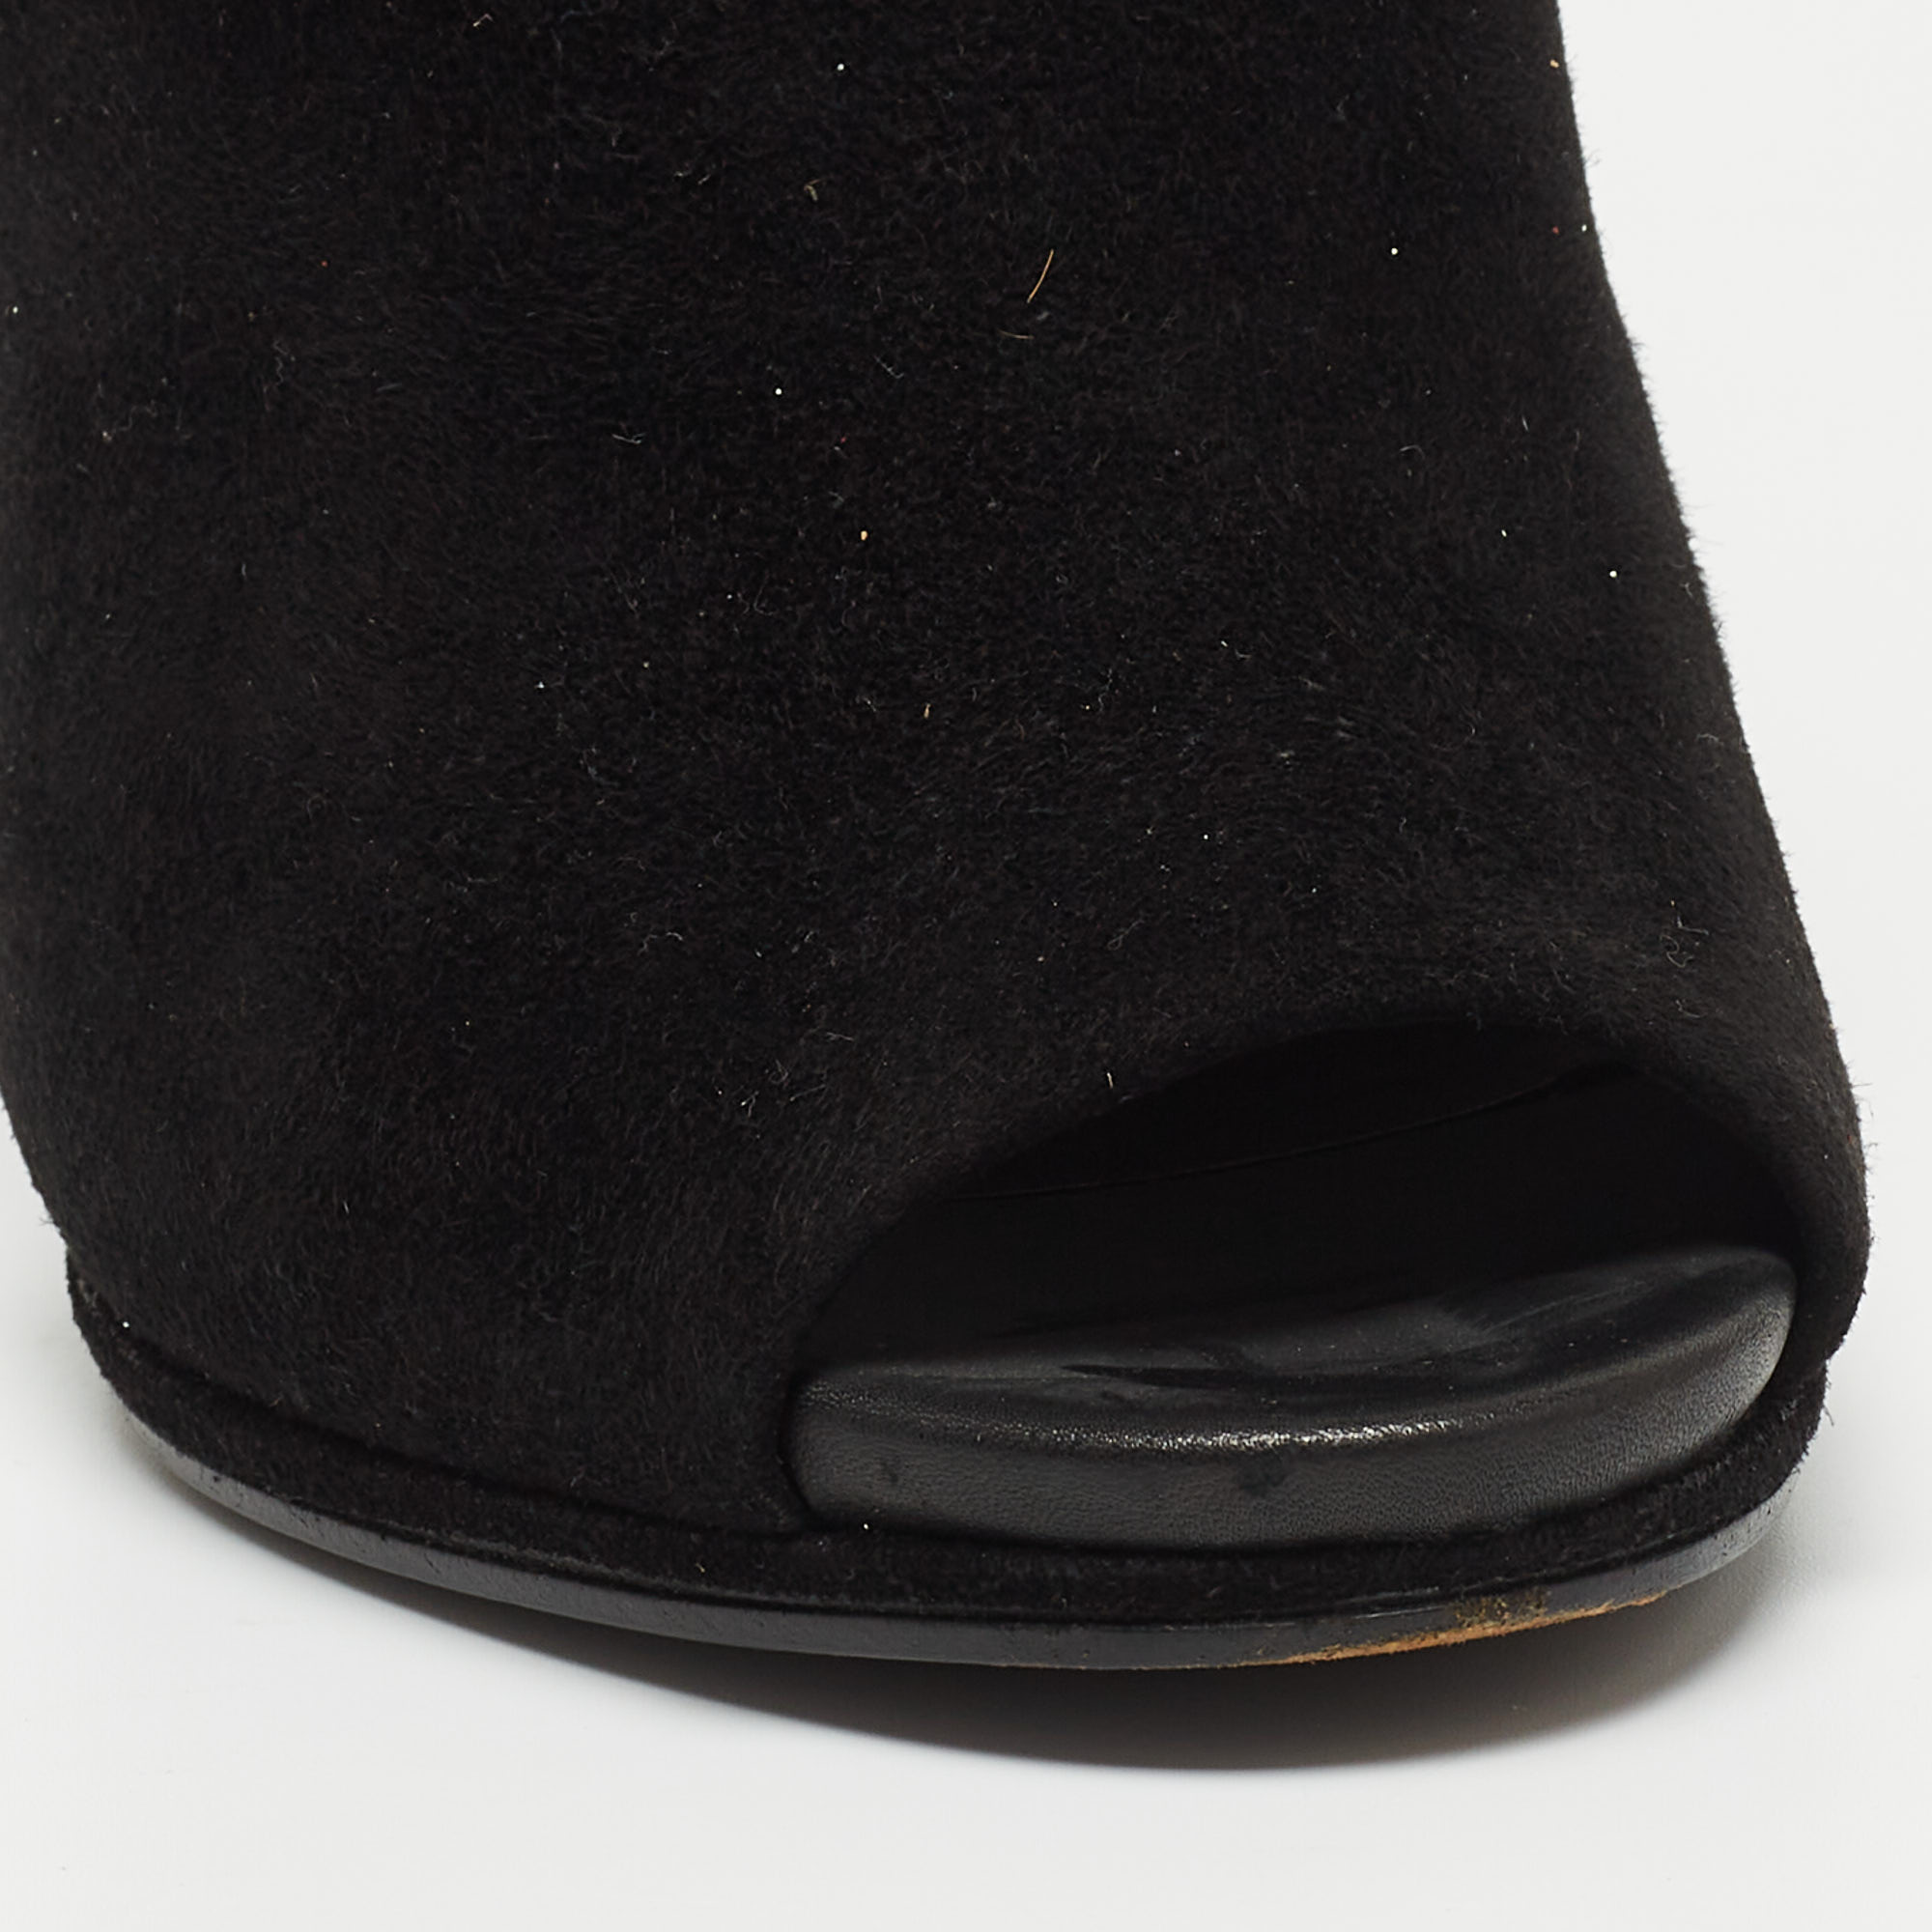 Gucci Black Suede Jane Peep Toe Booties Size 37.5